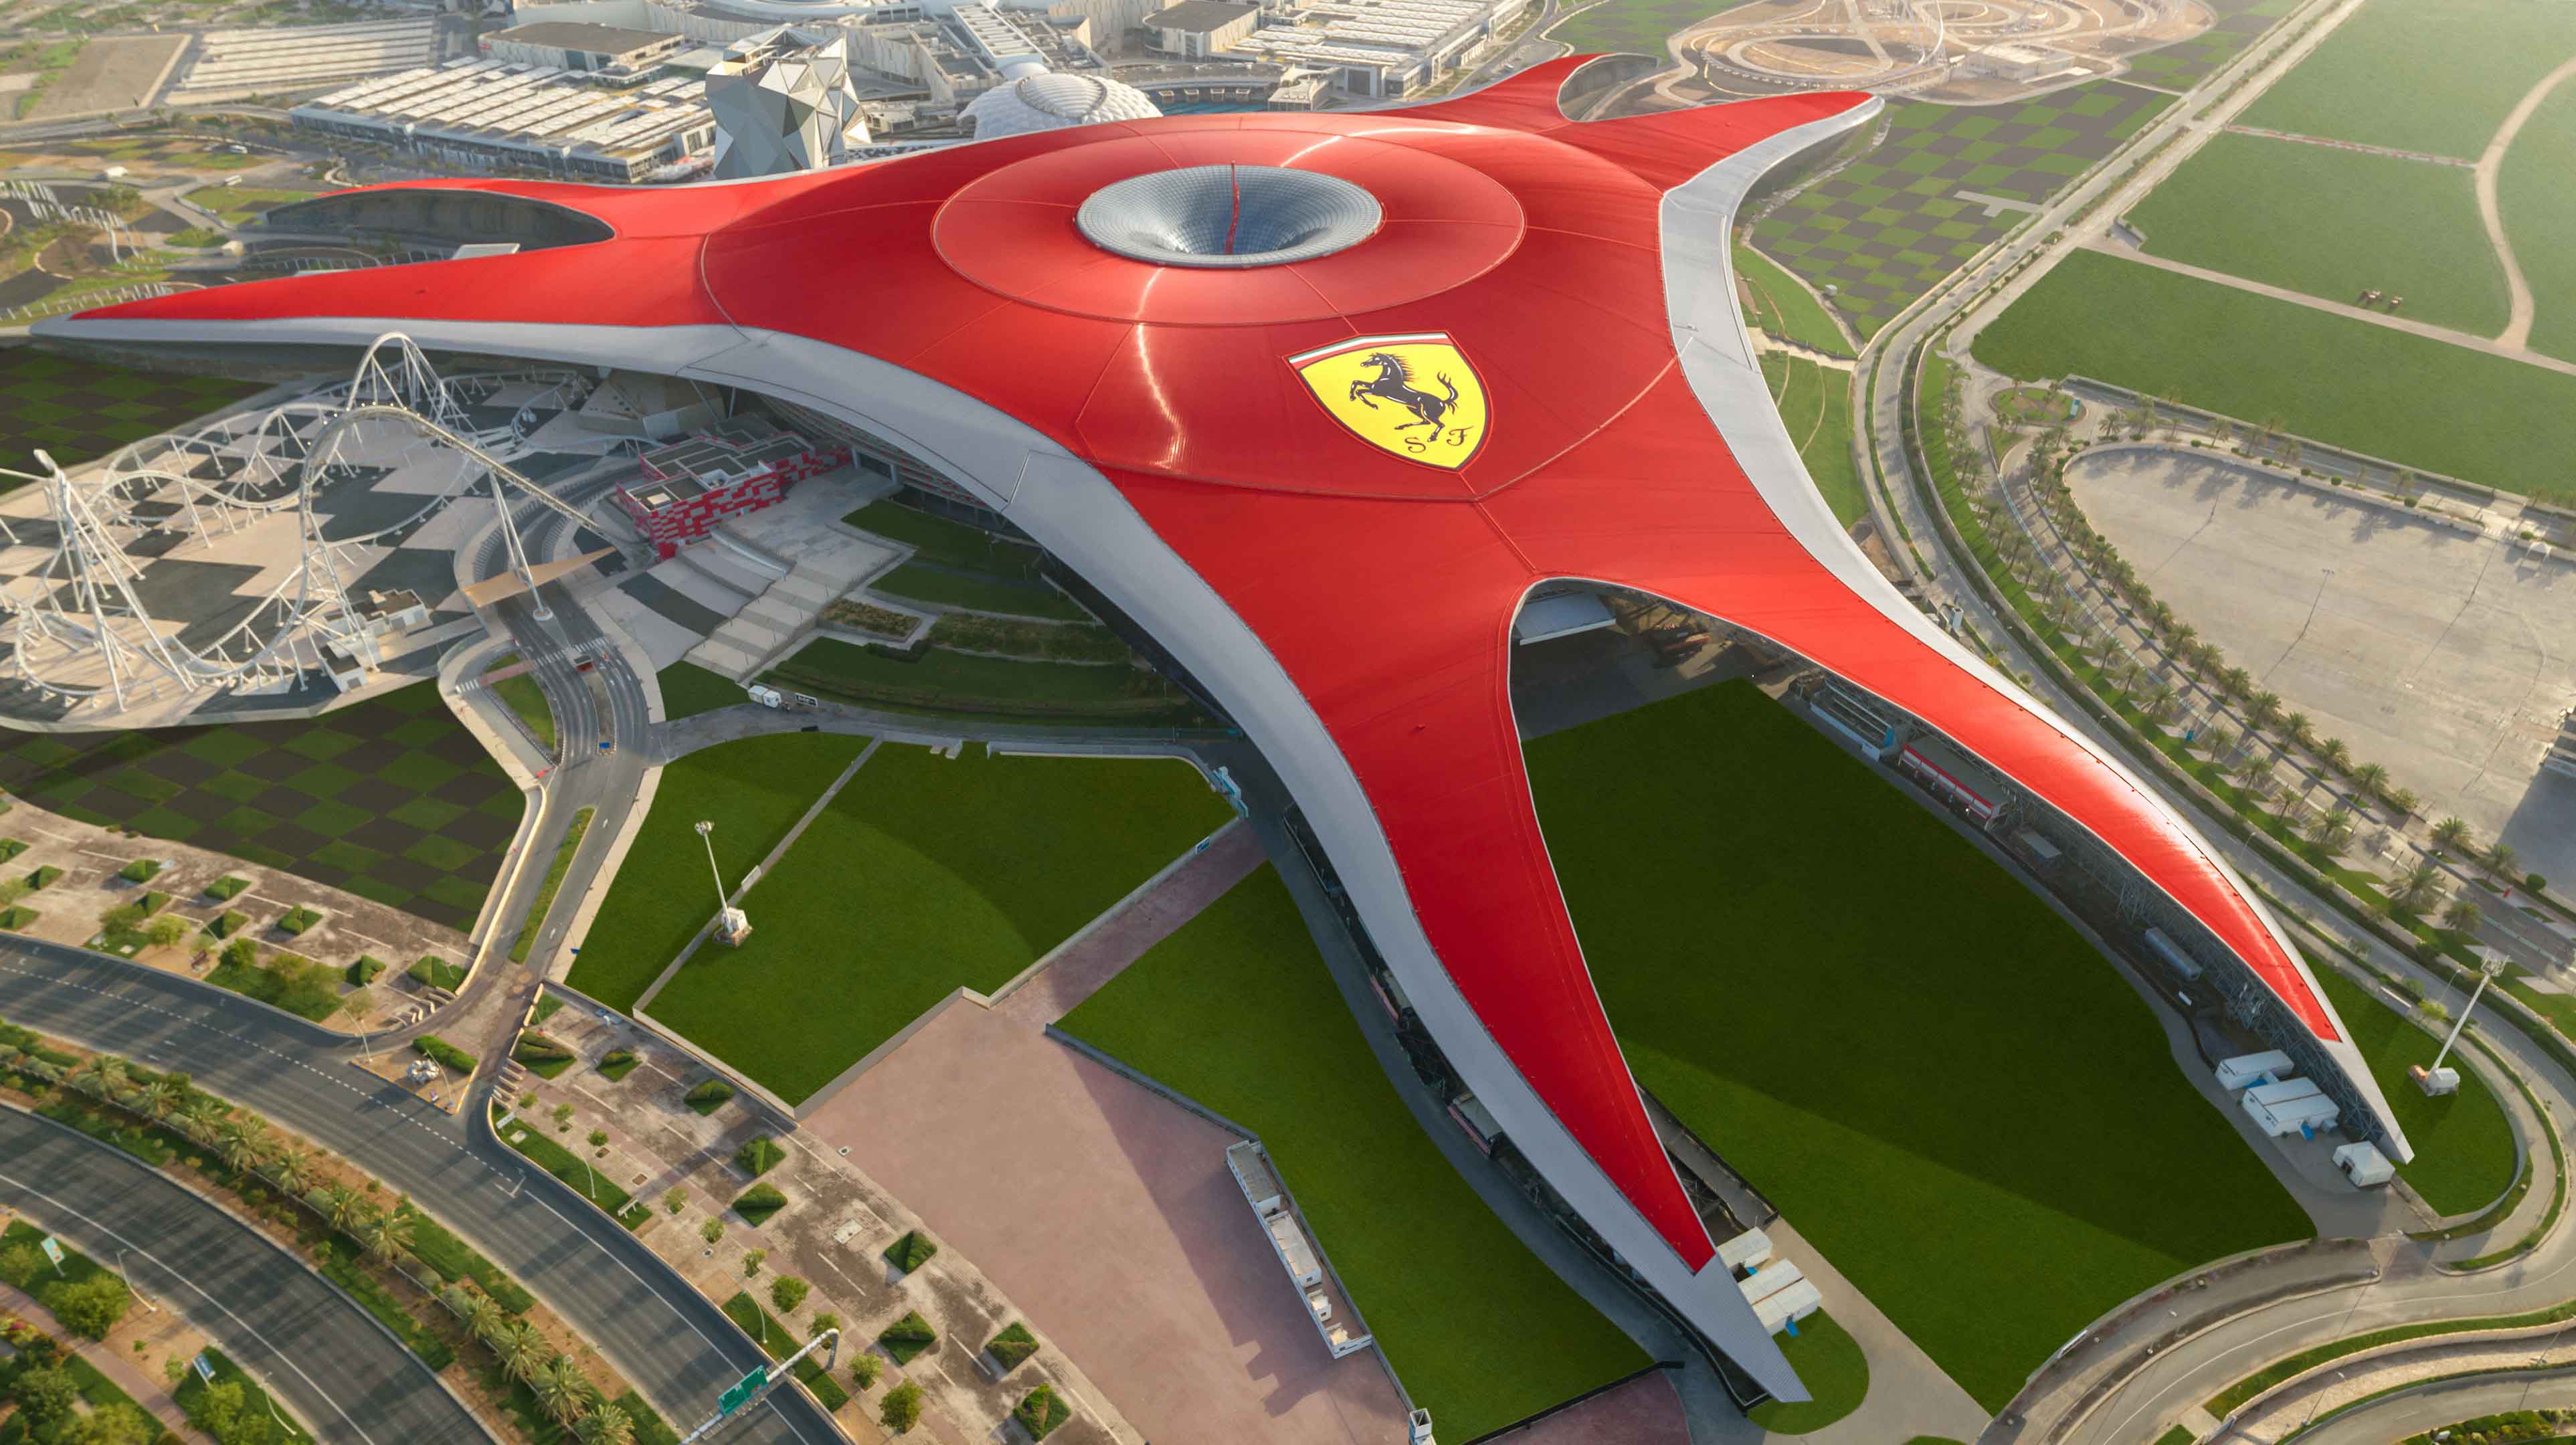 The iconic red roof of Ferrari World Abu Dhabi